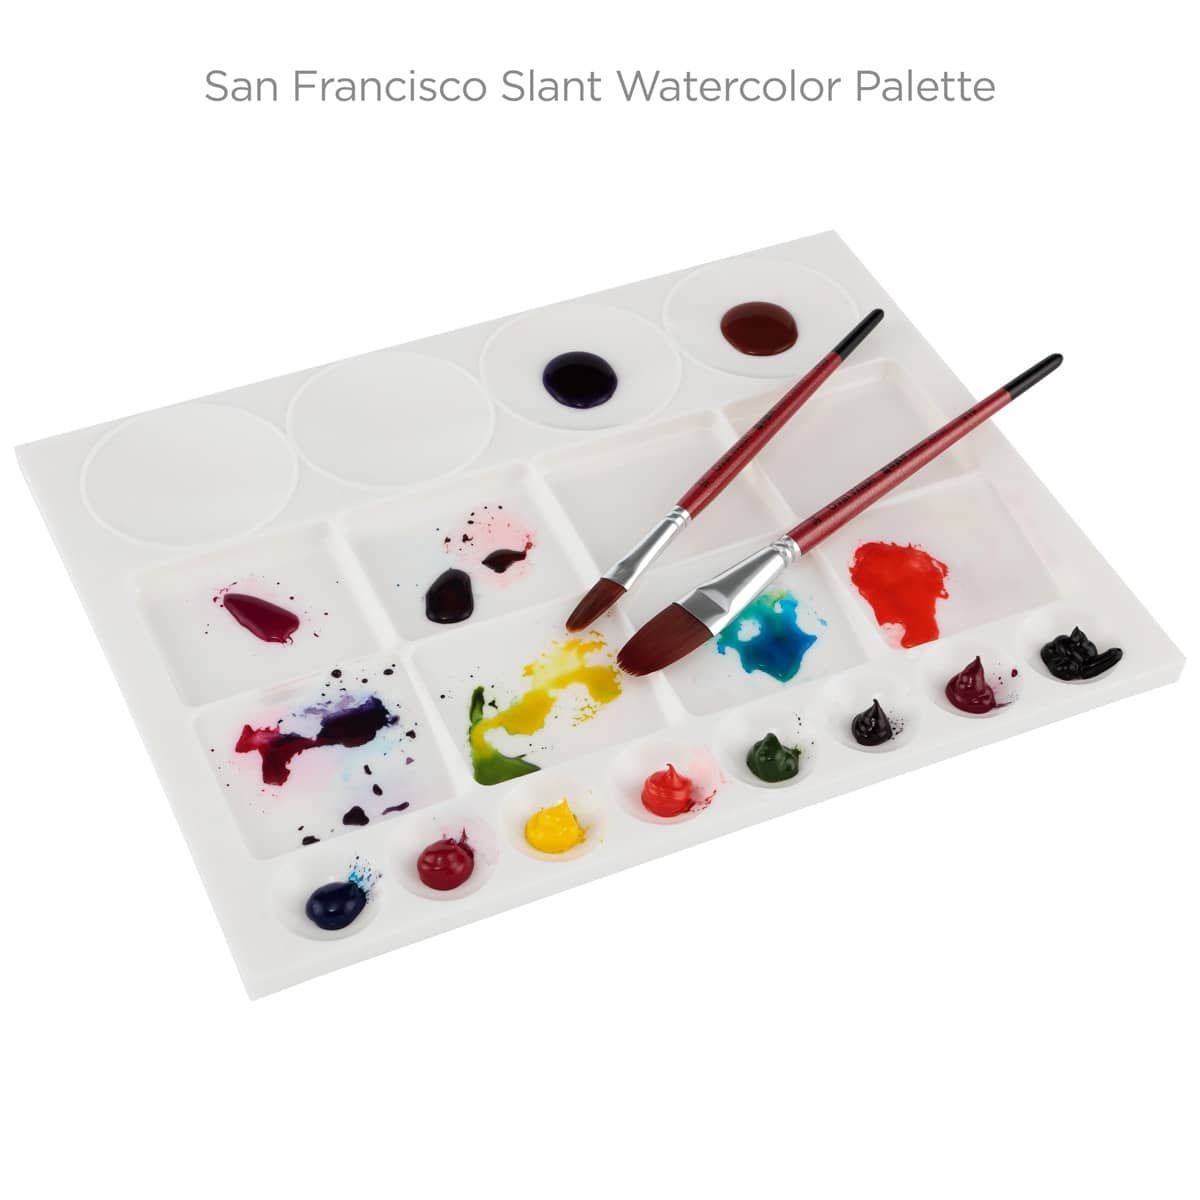 San Francisco Slant Watercolor Palette